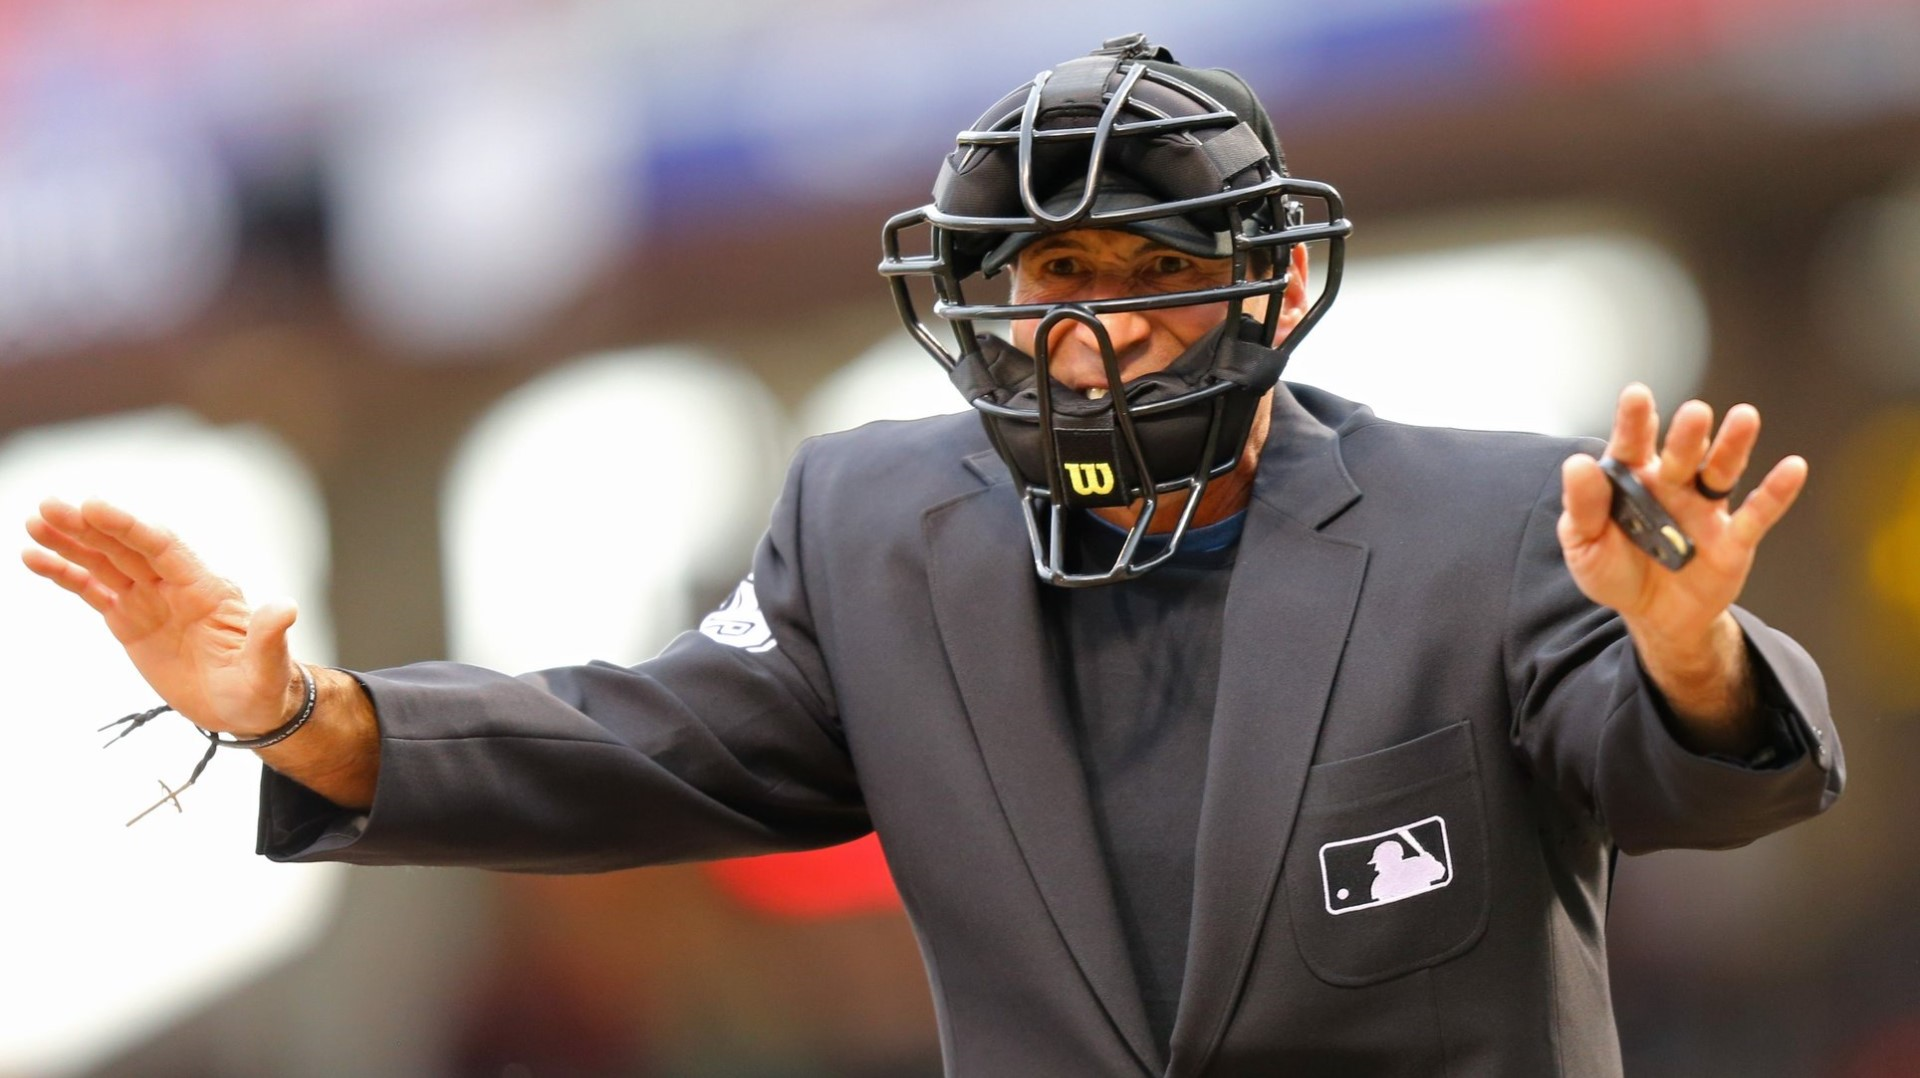 Ump files racial discrimination suit against MLB